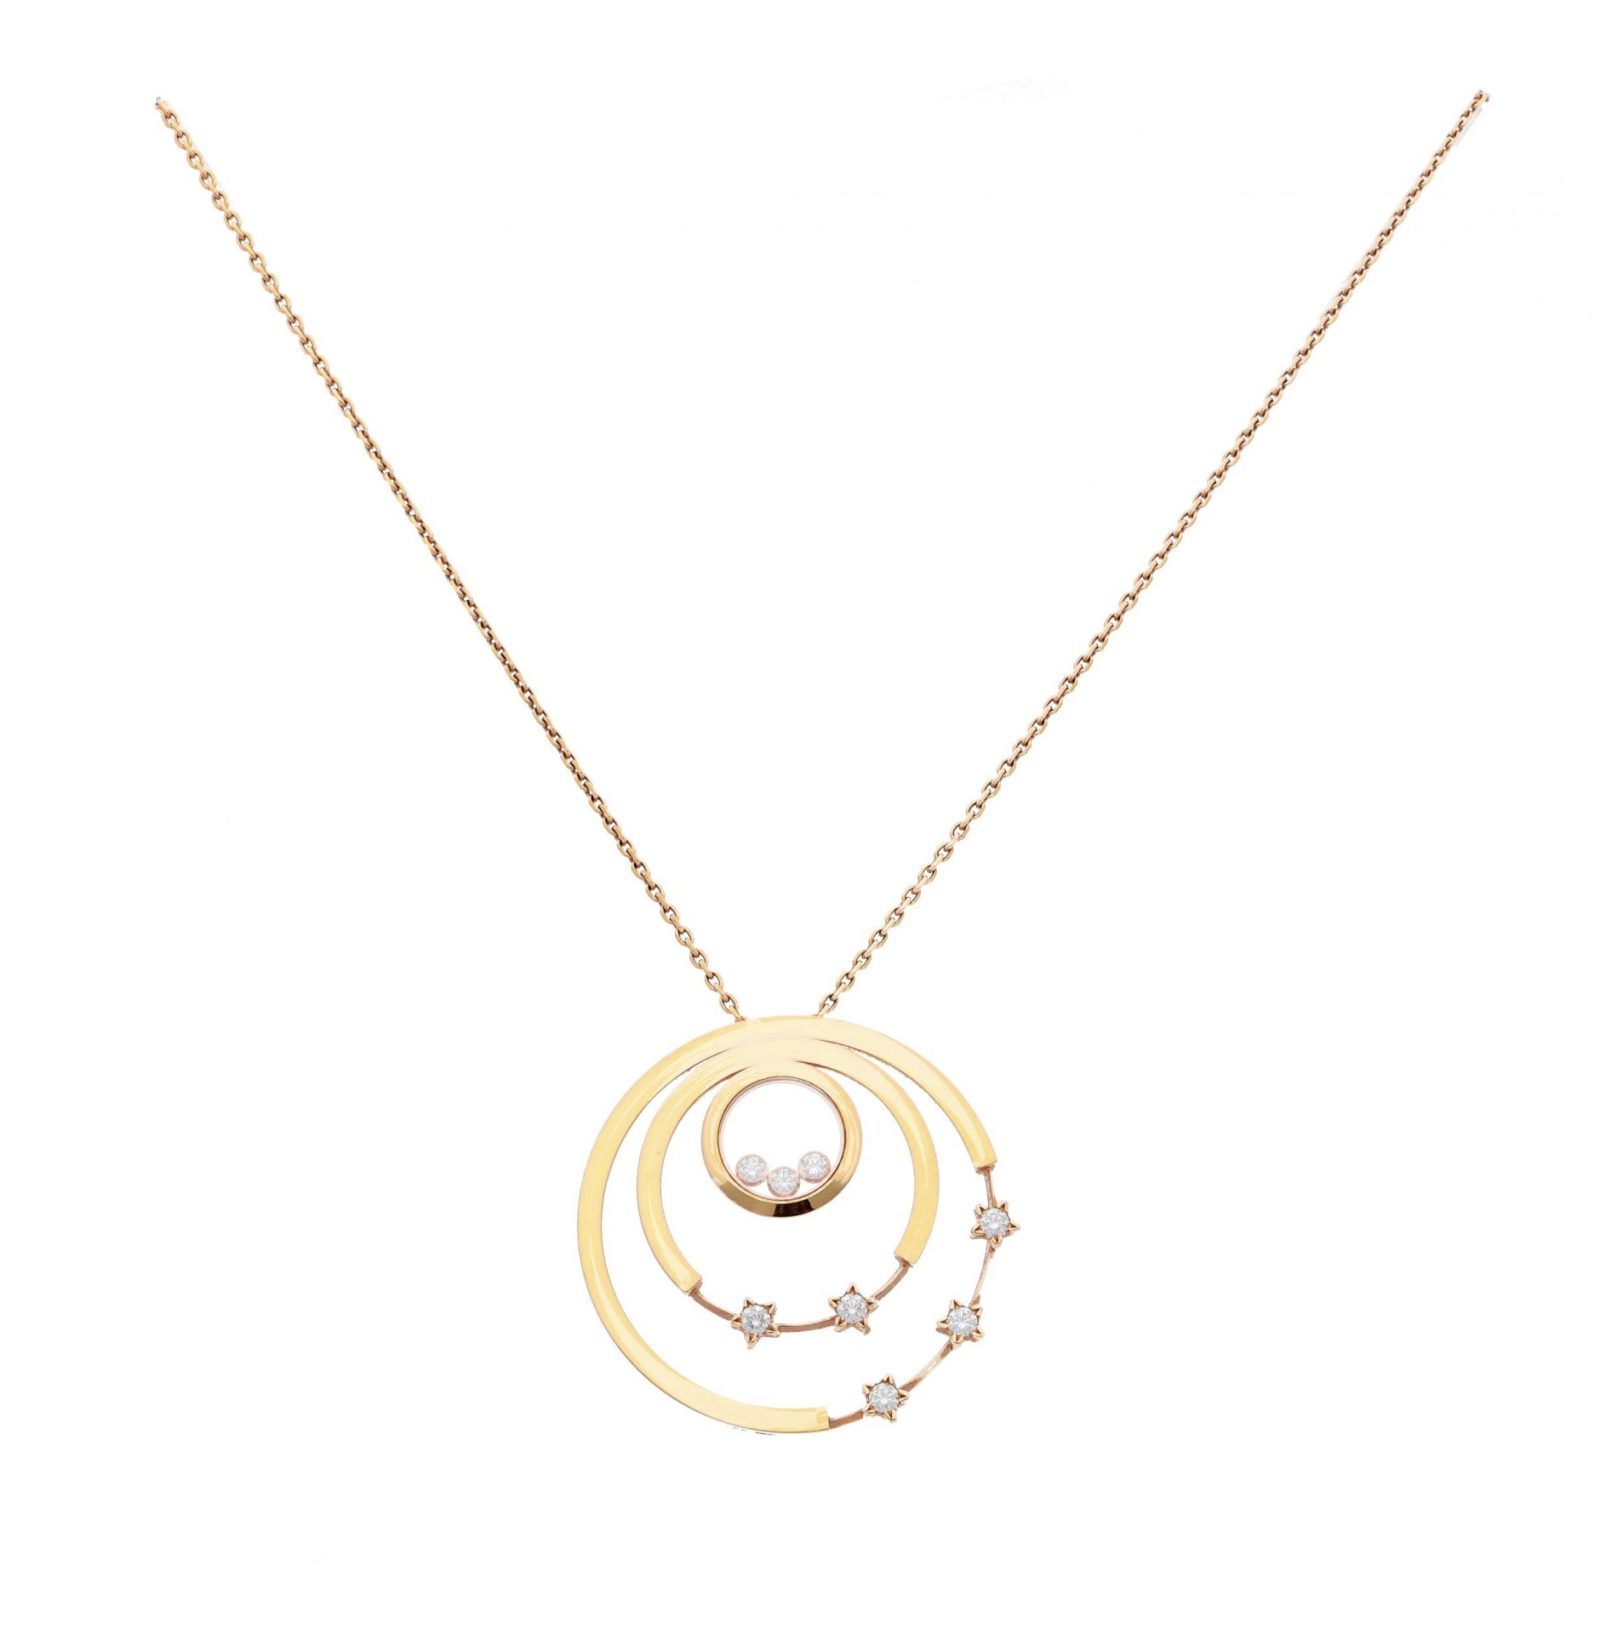 Chopard necklace 797623-5001